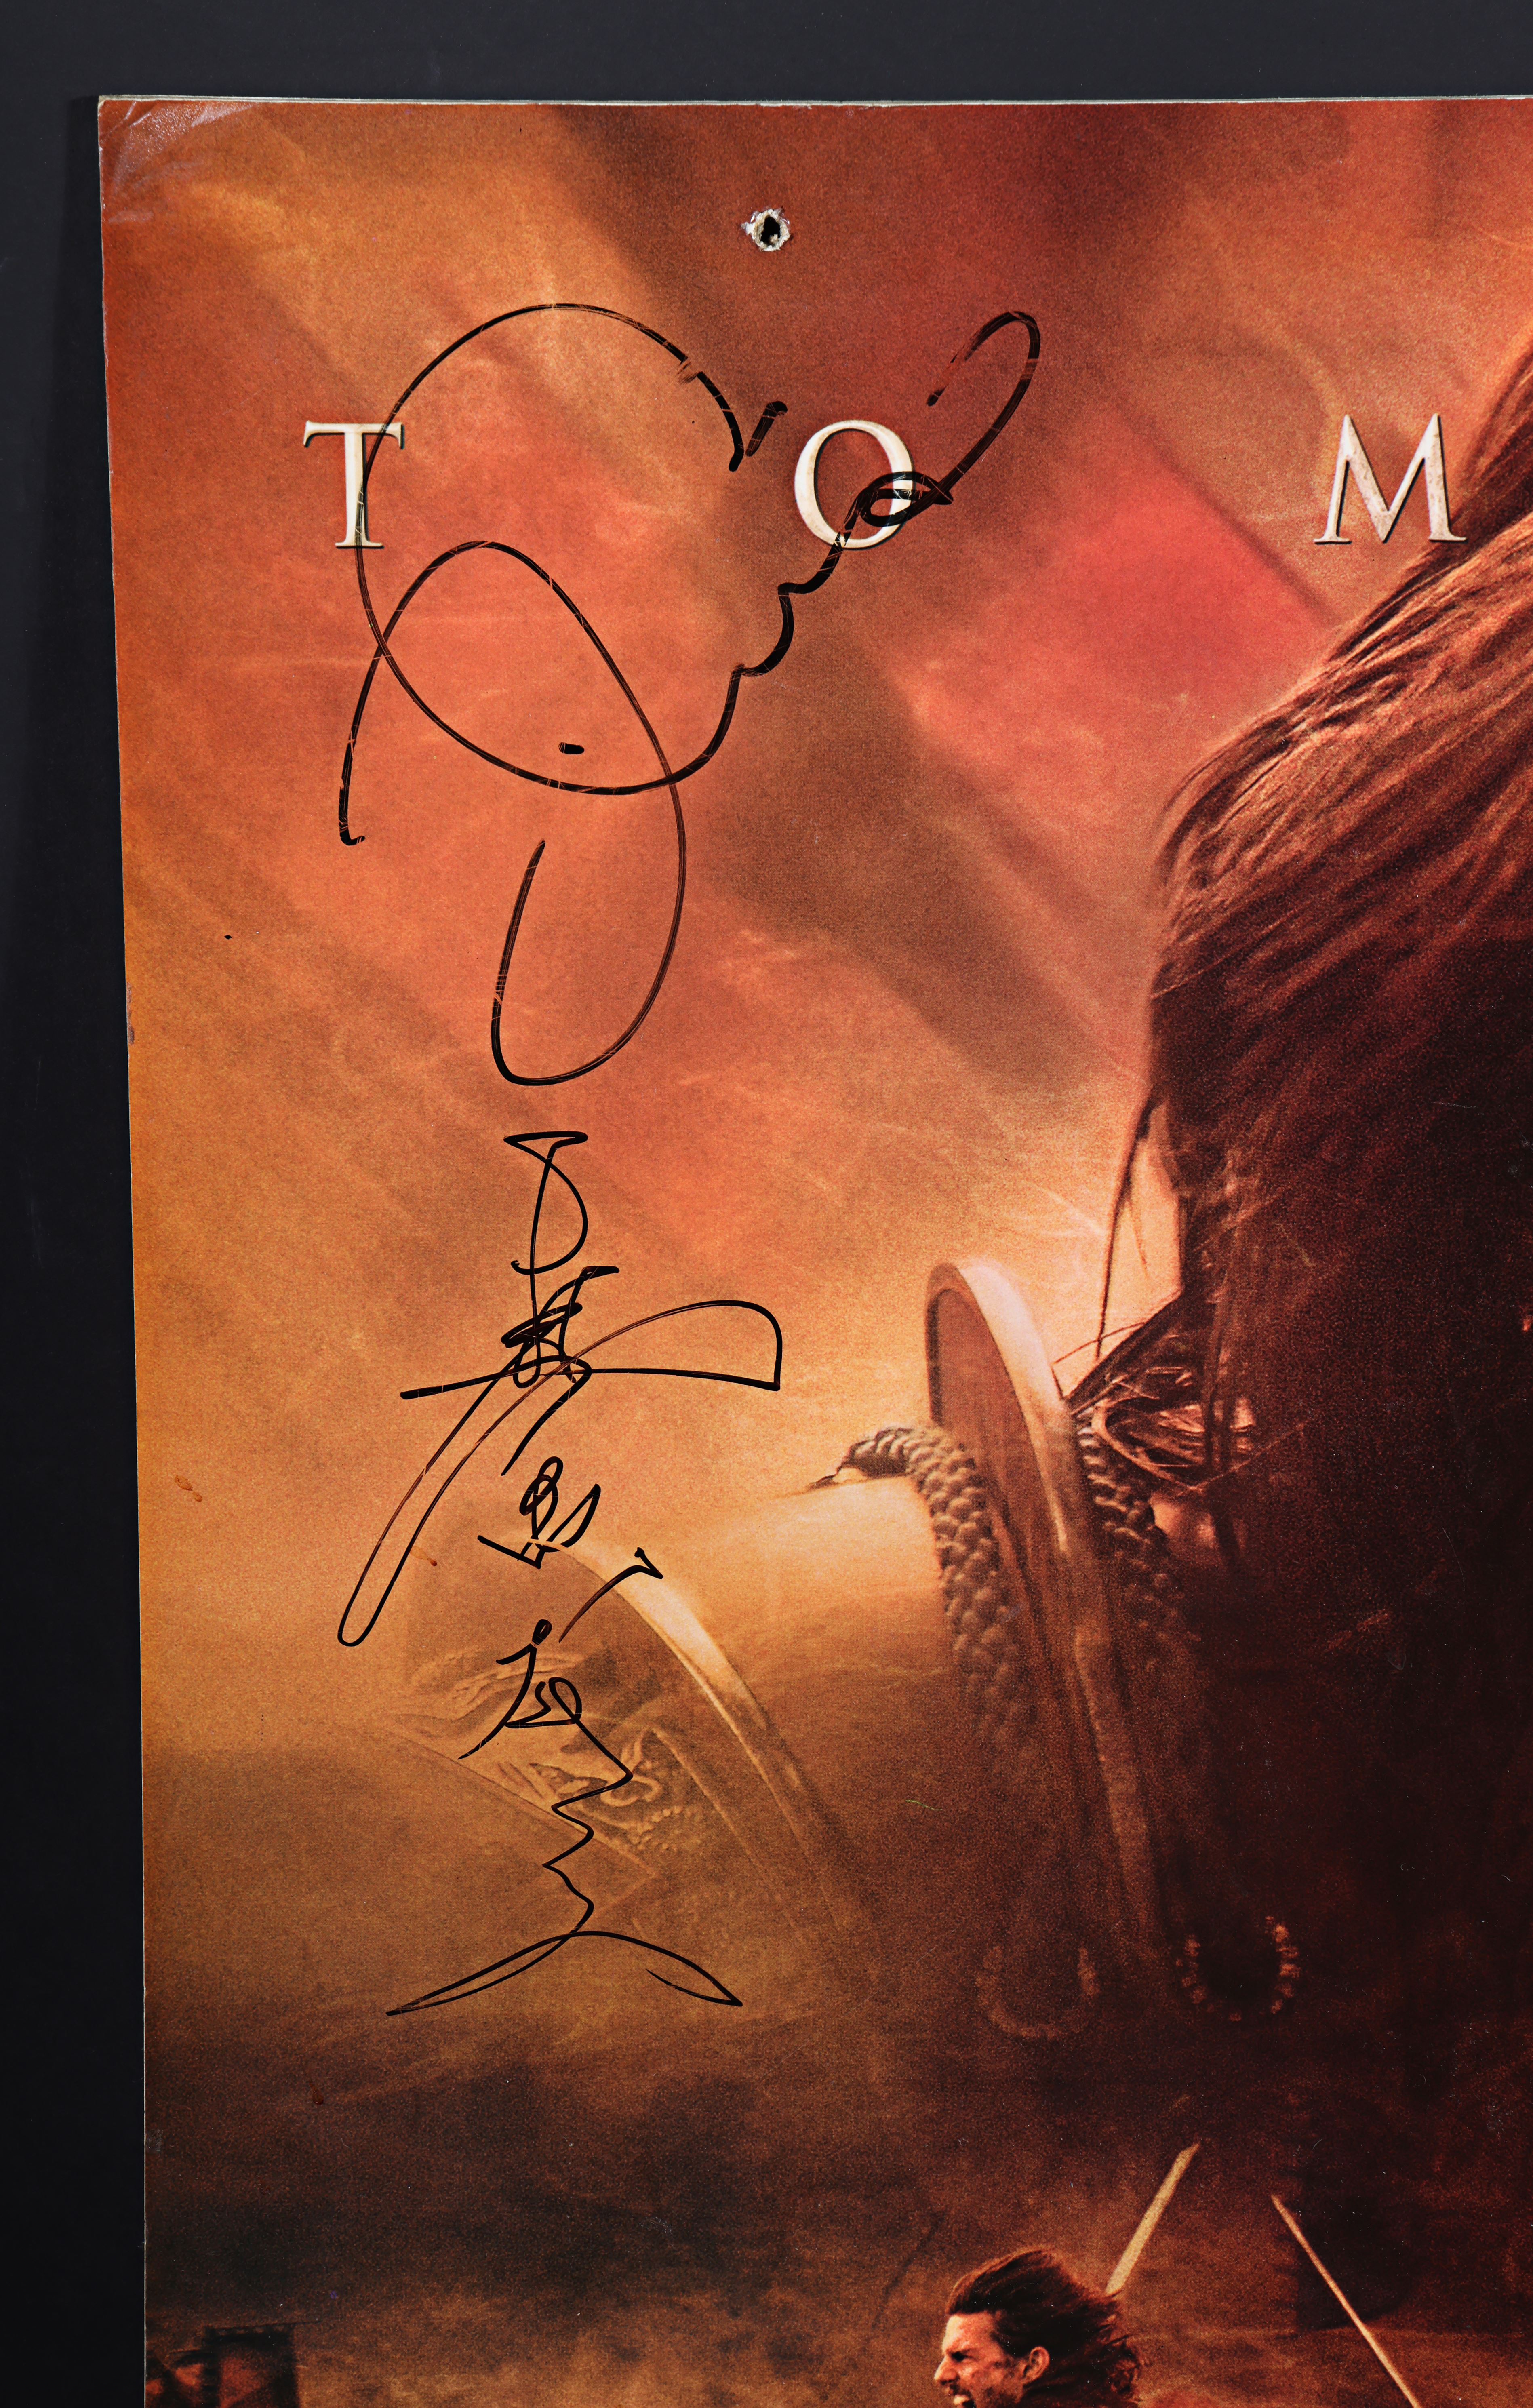 THE LAST SAMURAI (2003) - Tom Cruise and Hiroyuki Sanada Autographed Premiere Board, 2003 - Image 2 of 2